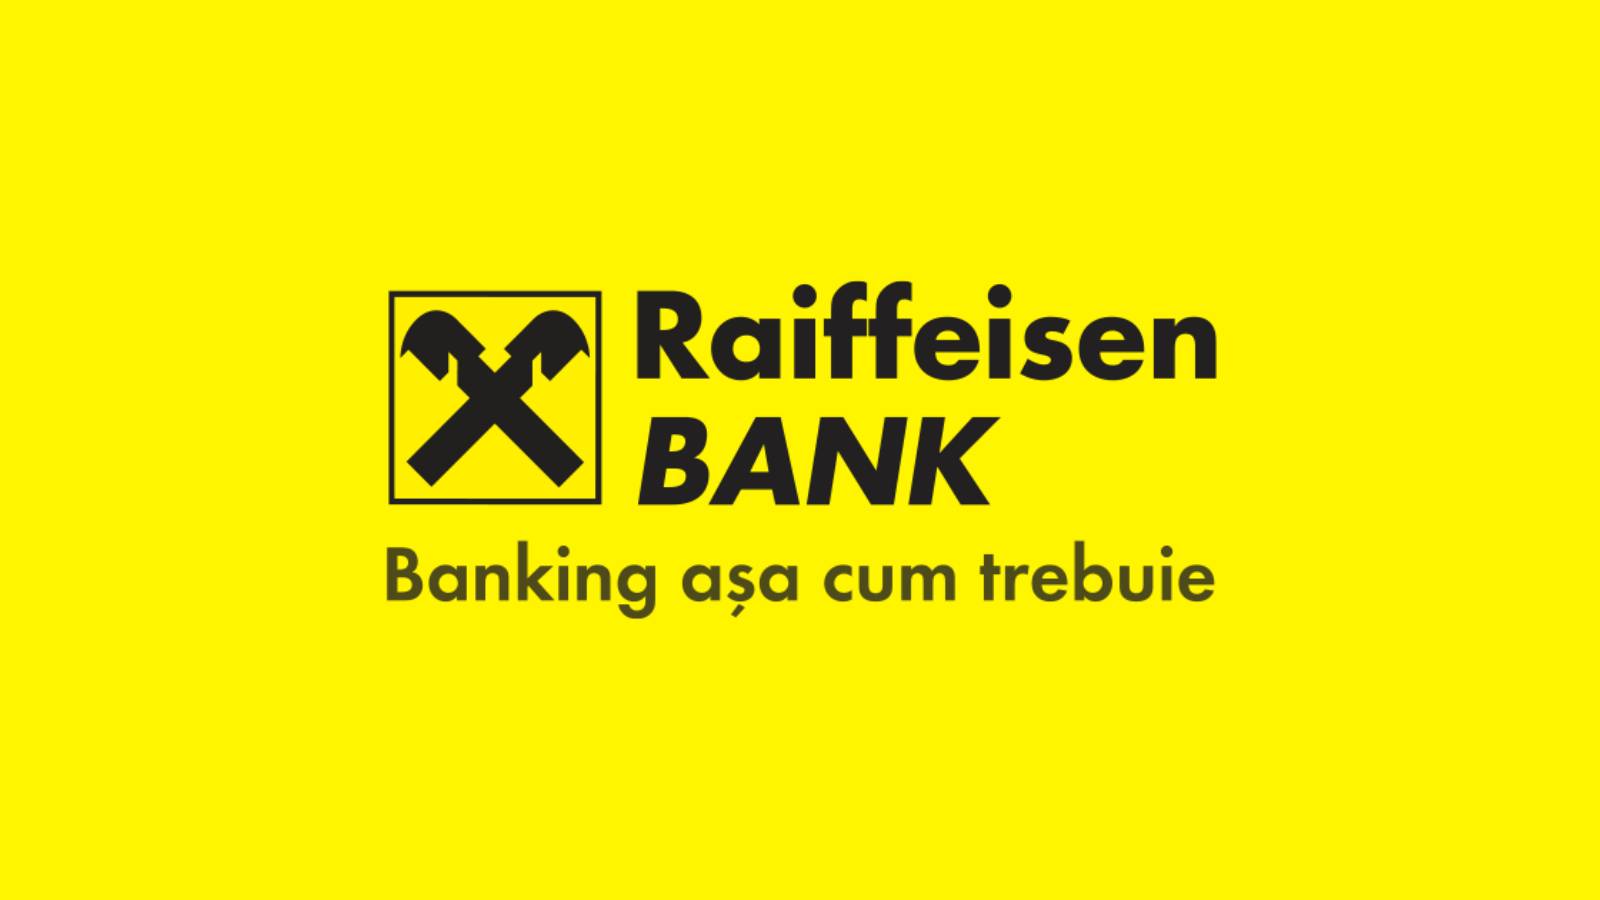 Raiffeisen Bank friends